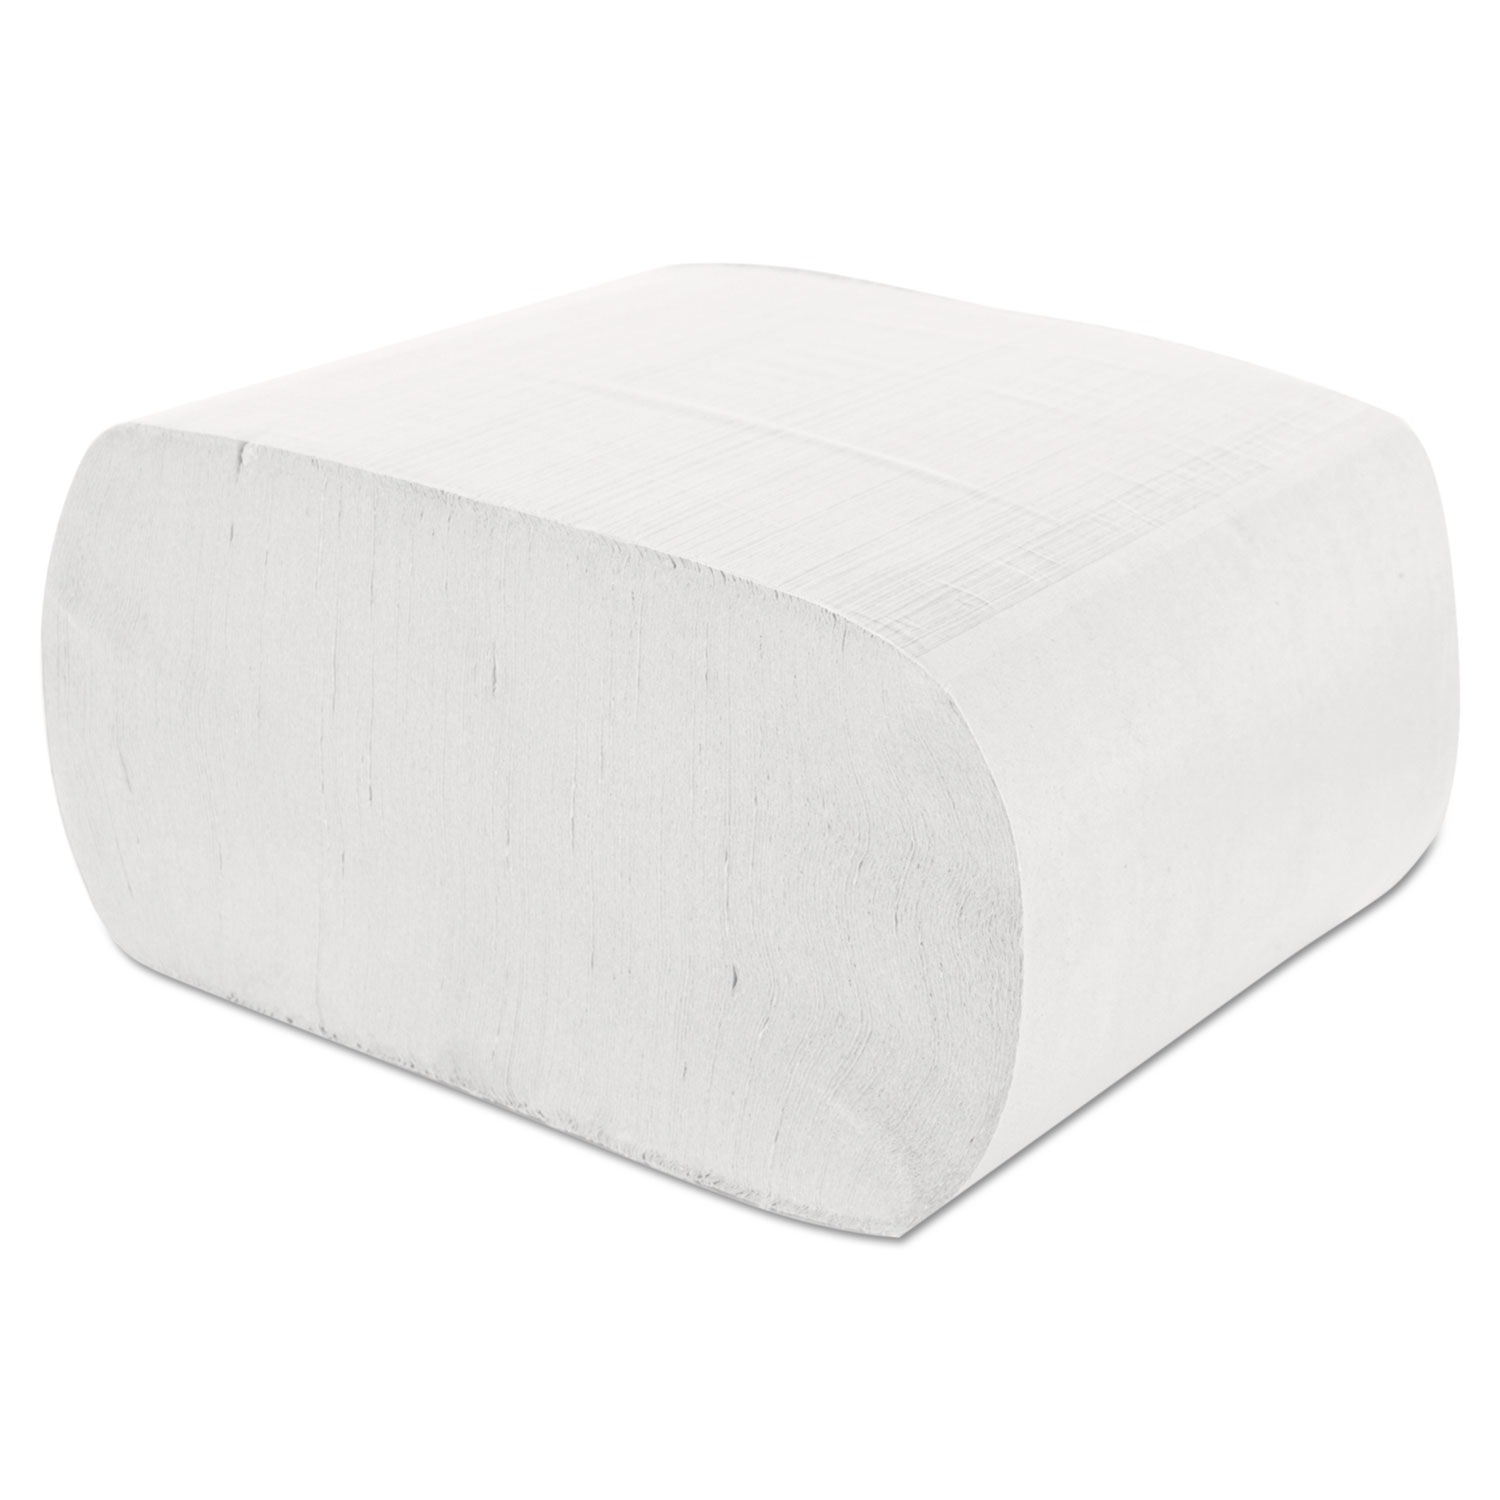  Morcon Tissue 4545VN Valay Interfolded Napkins, 1-Ply, White, 6.5 x 8.25, 6,000/Carton (MOR4545VN) 